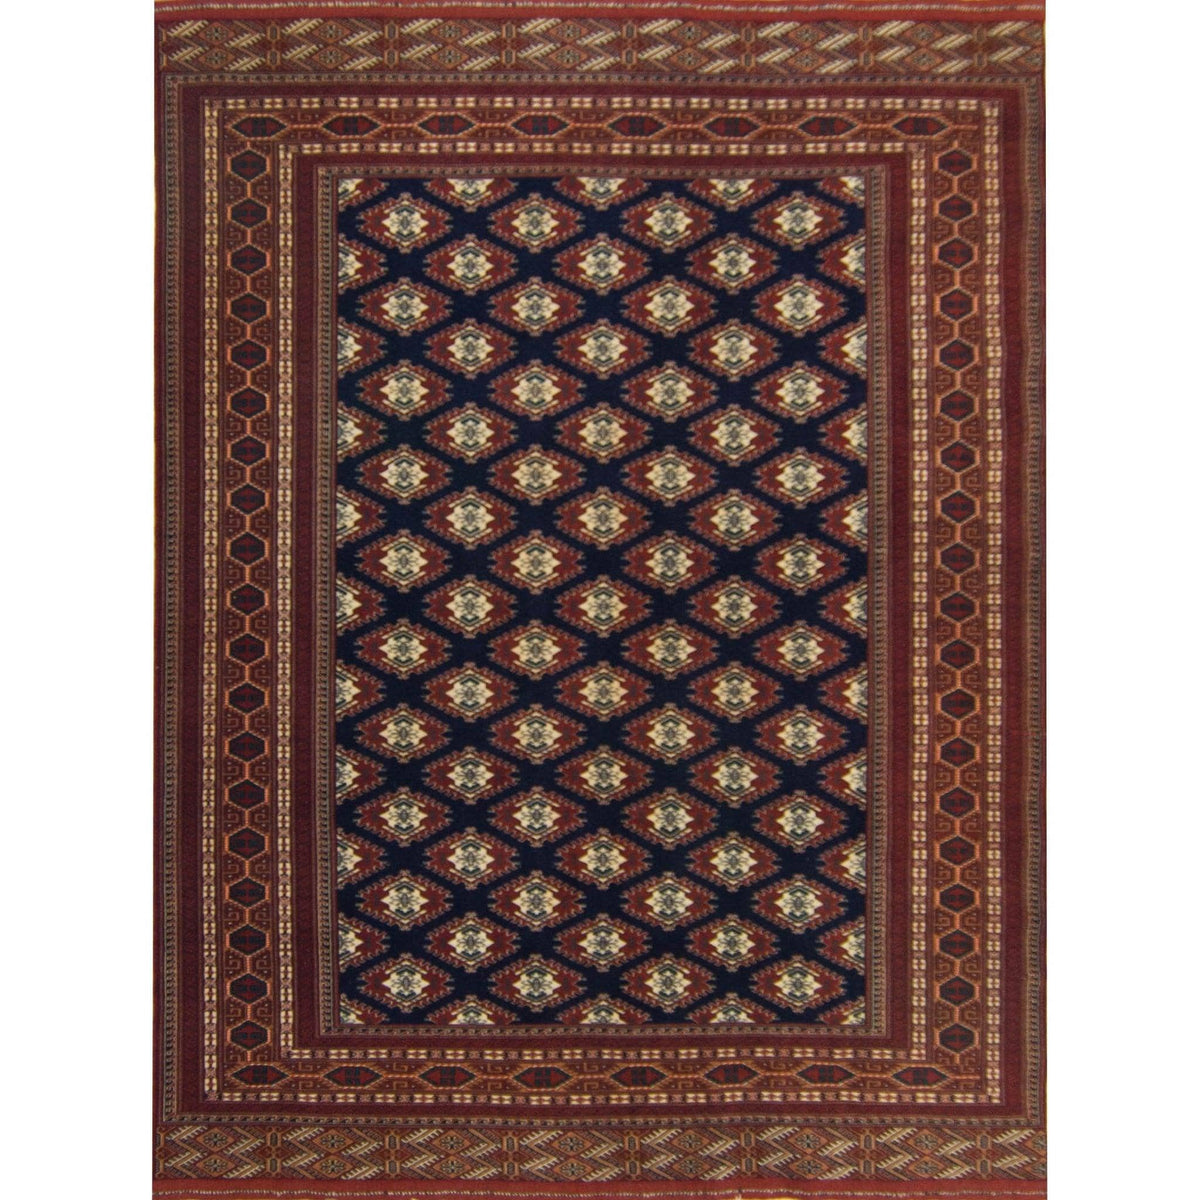 Super Fine Hand-knotted 100% Wool Persian Turkmen Rug 206cm X 297cm